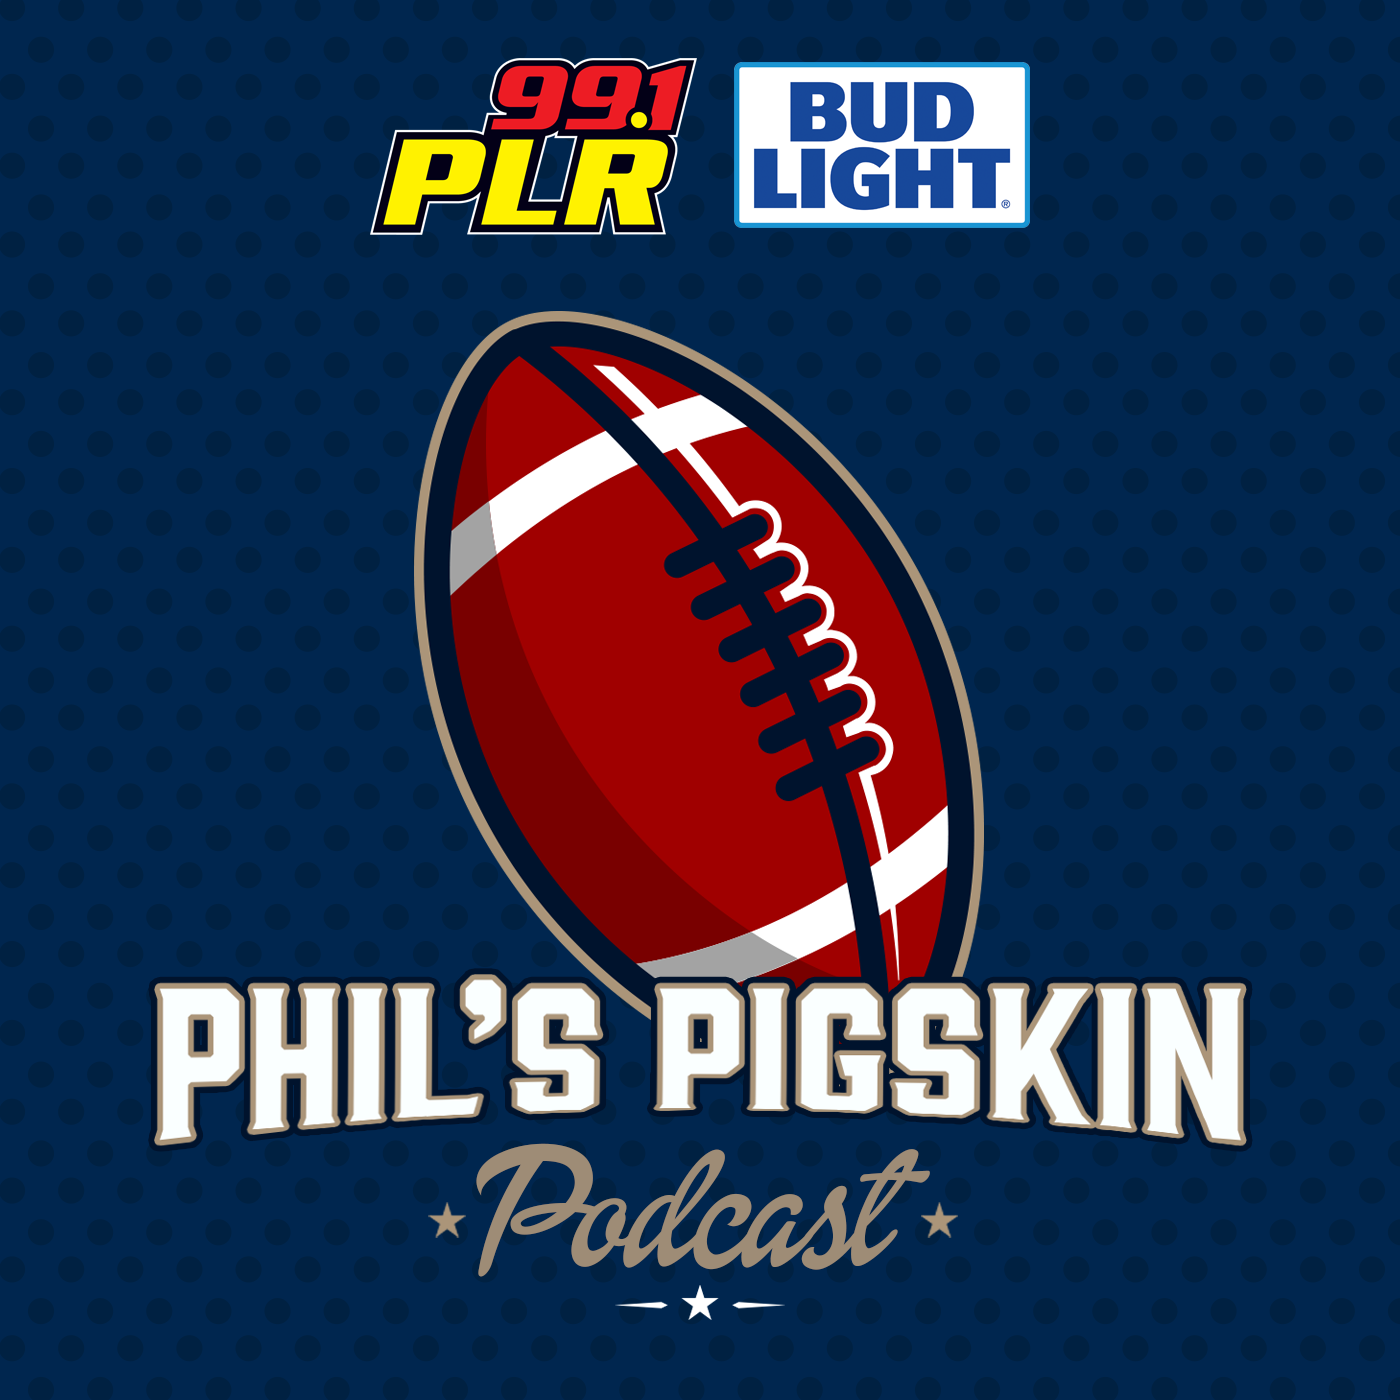 99.1 PLR & Bud Light Phil’s Pigskin Podcast: Week 1 Preview